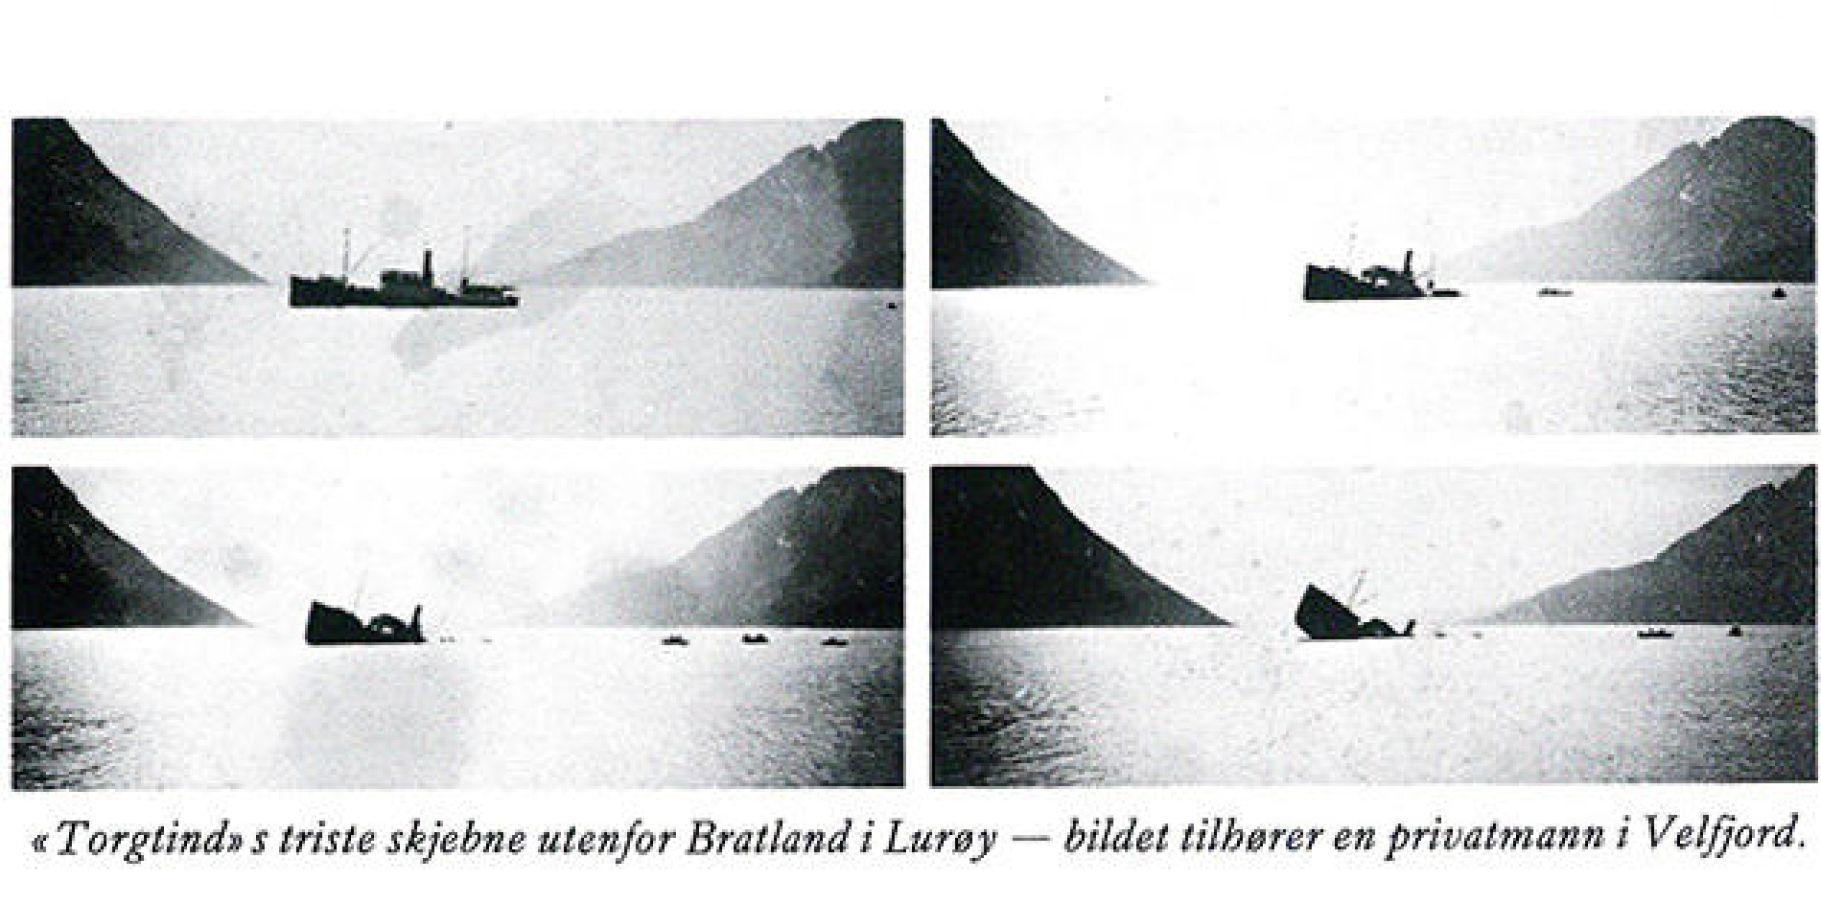 Fotoserie som viser skipet Tortind synke i havet